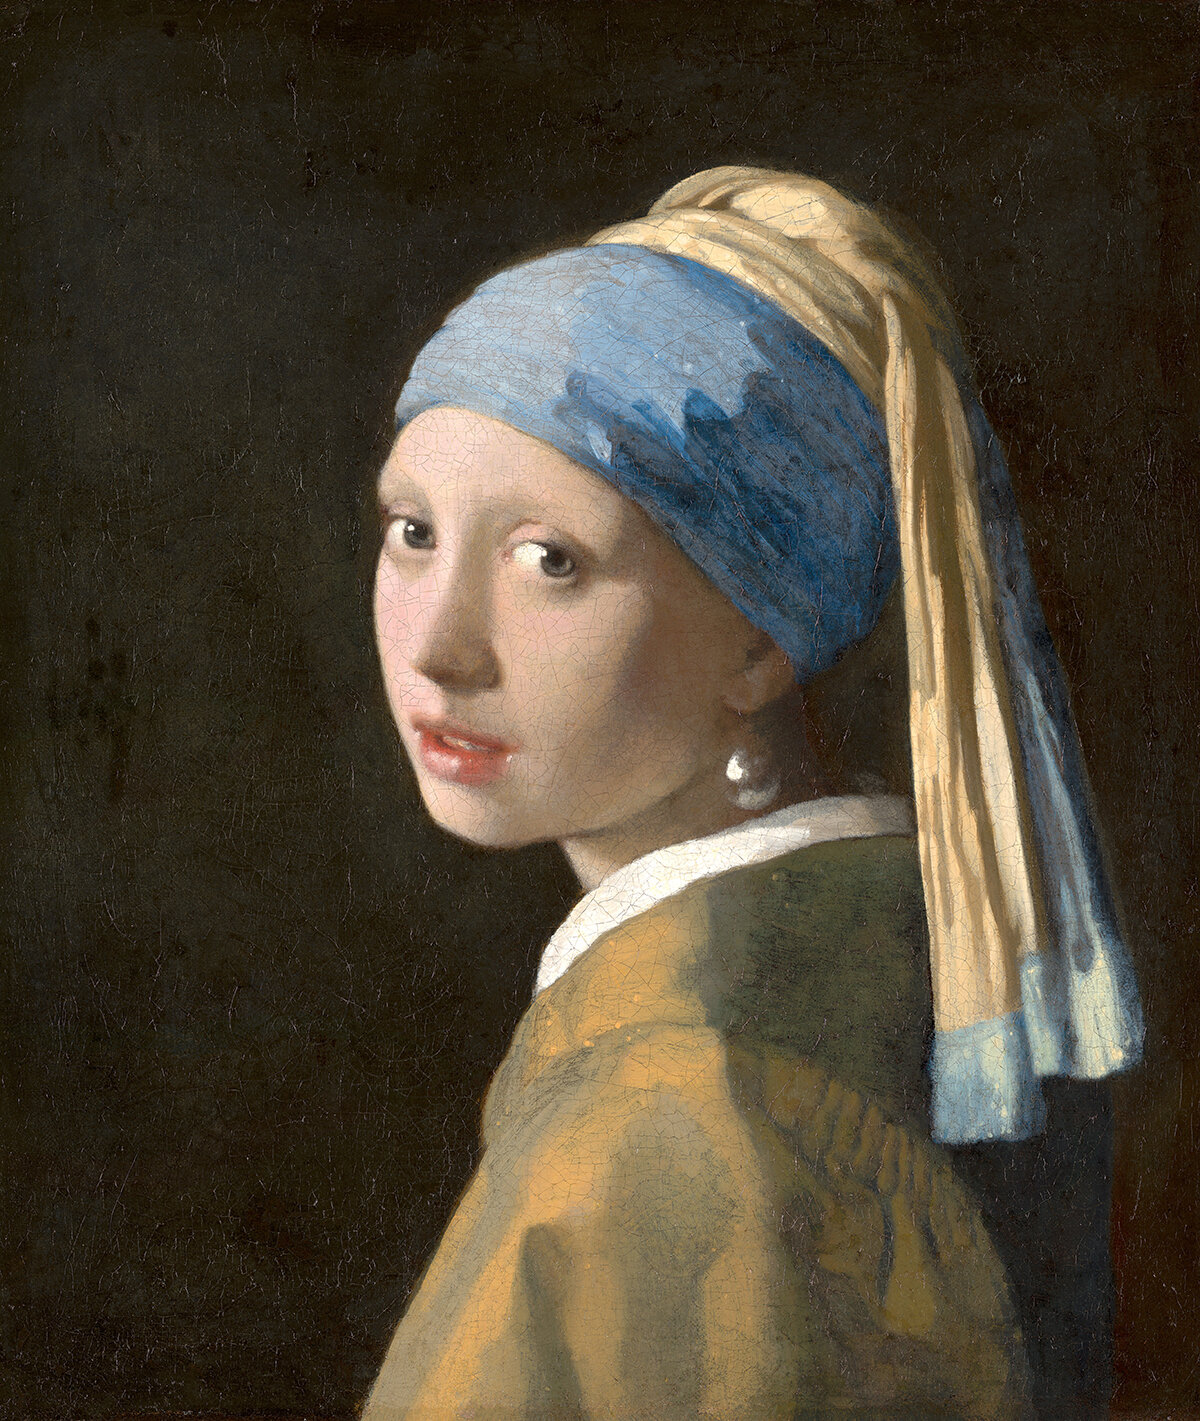 Ultramarine in Girl with a Pearl Earring; Johannes Vermeer, 1665. Credit: Mauritshuis, The Hague